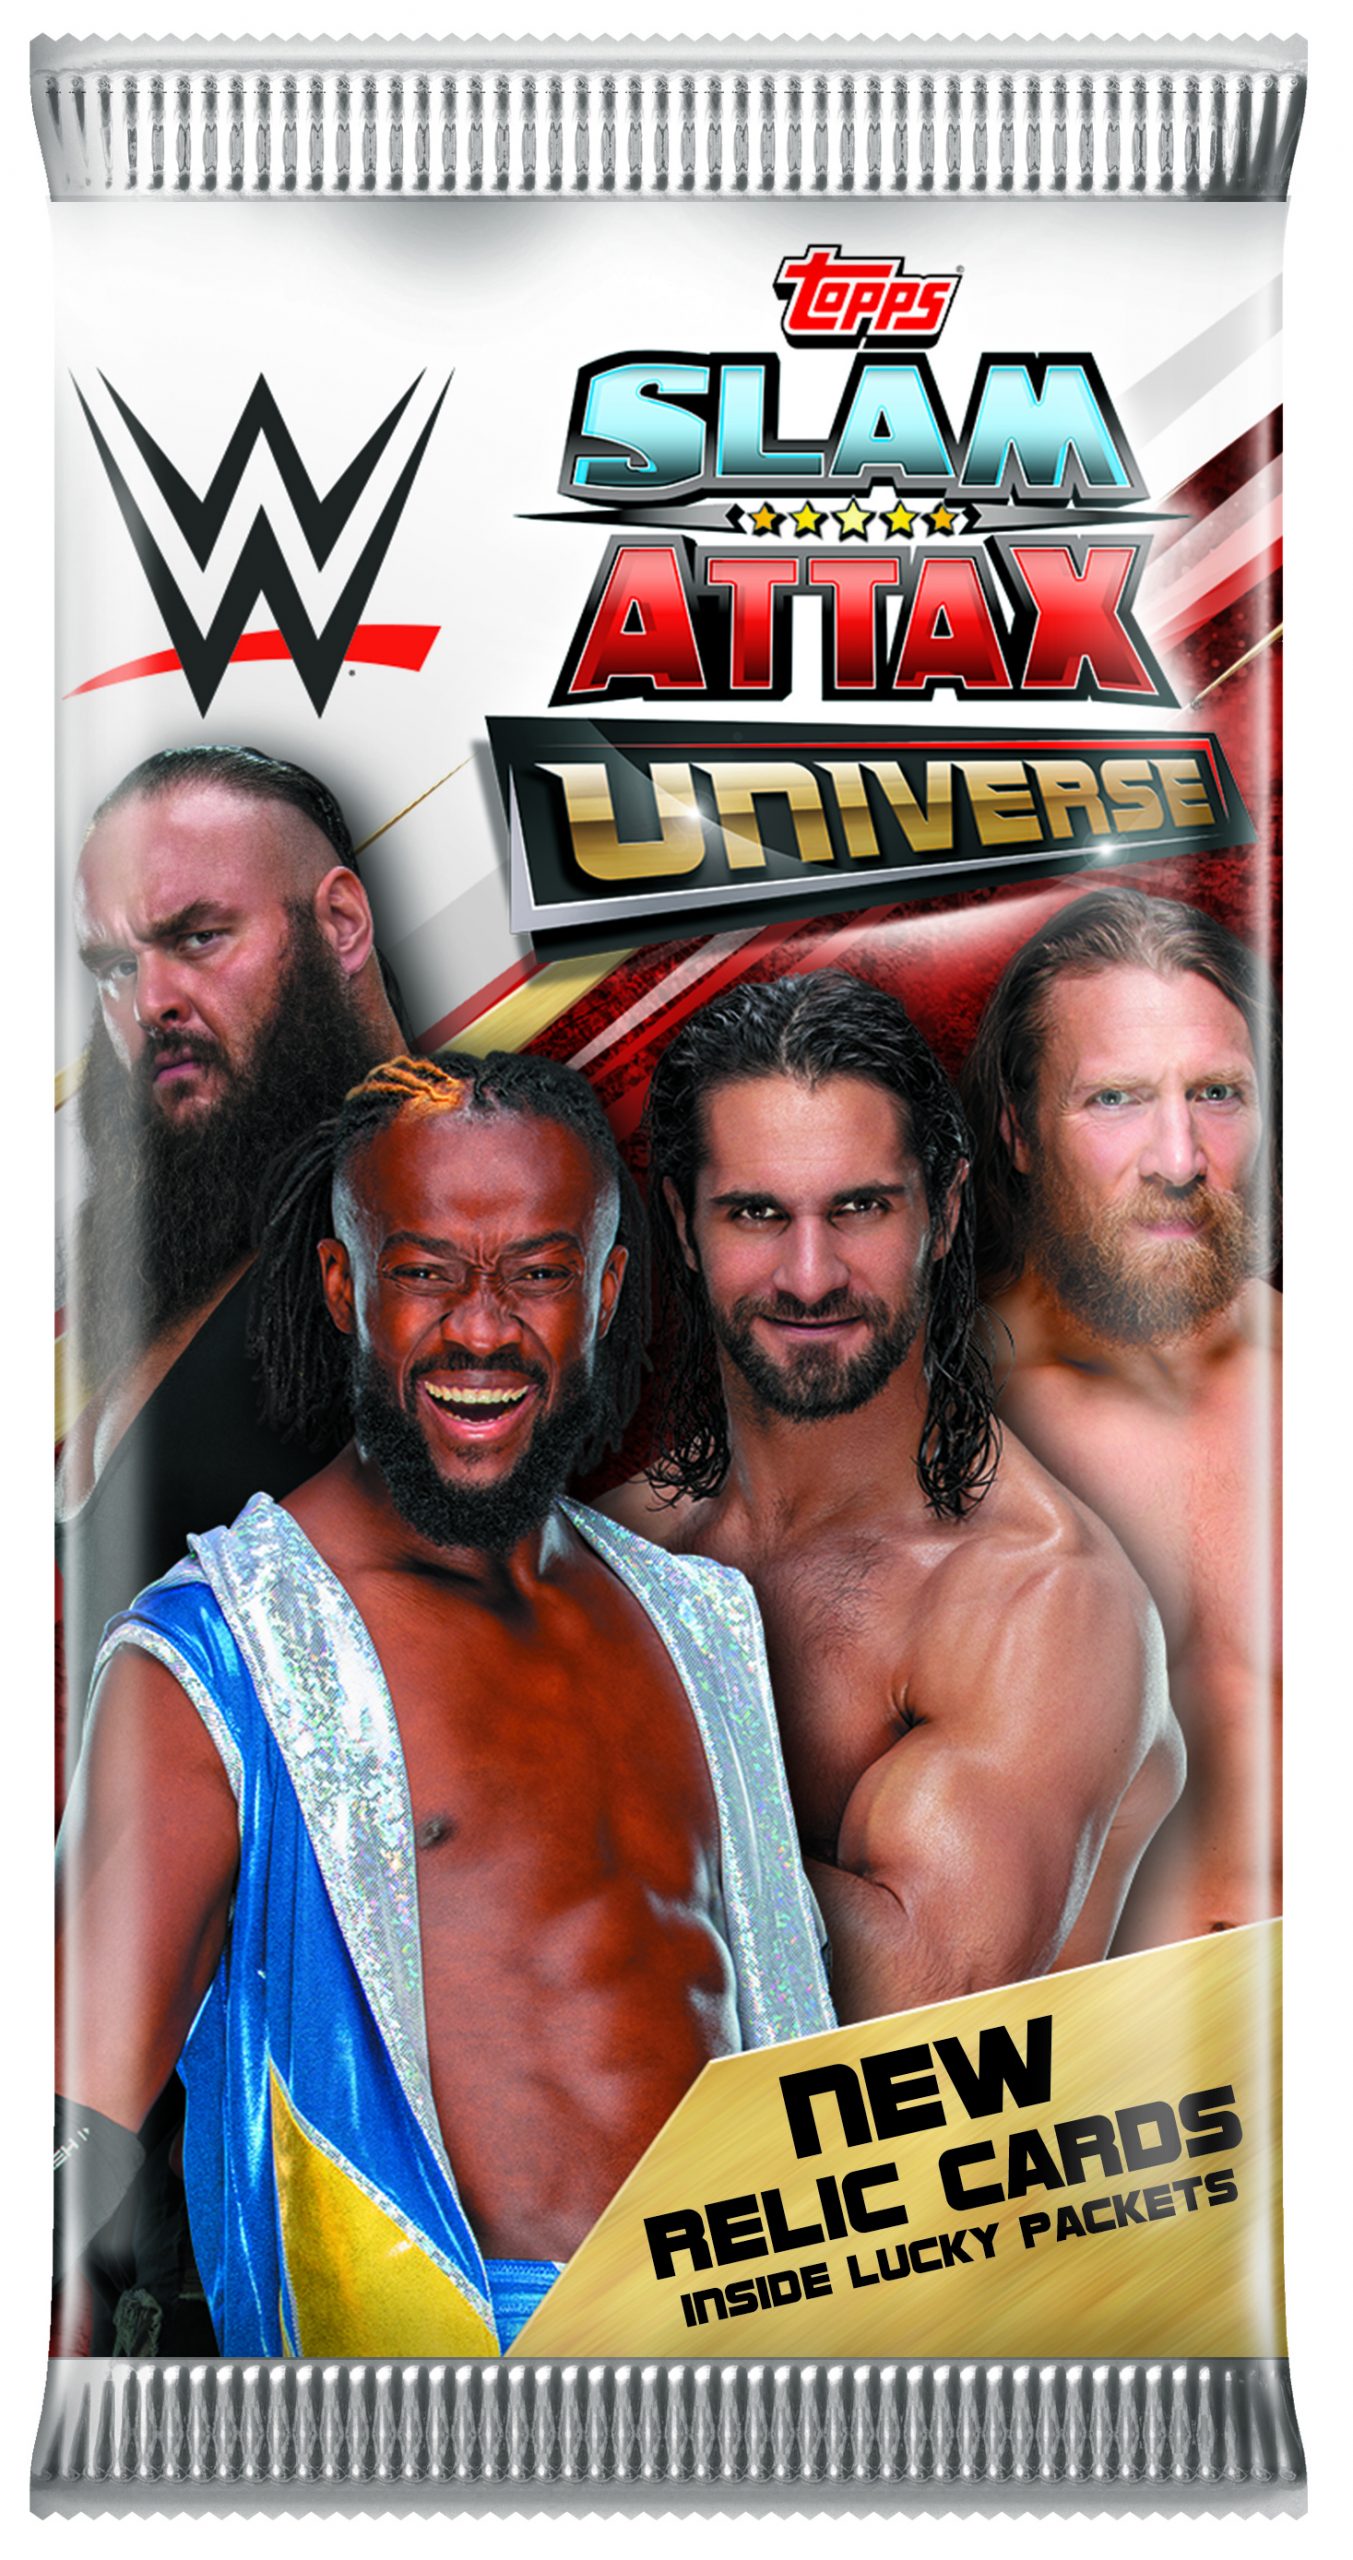 Ltd Topps WWE Slam Attax Universe 2019 Trading Cards Game Starter Pack Binder 